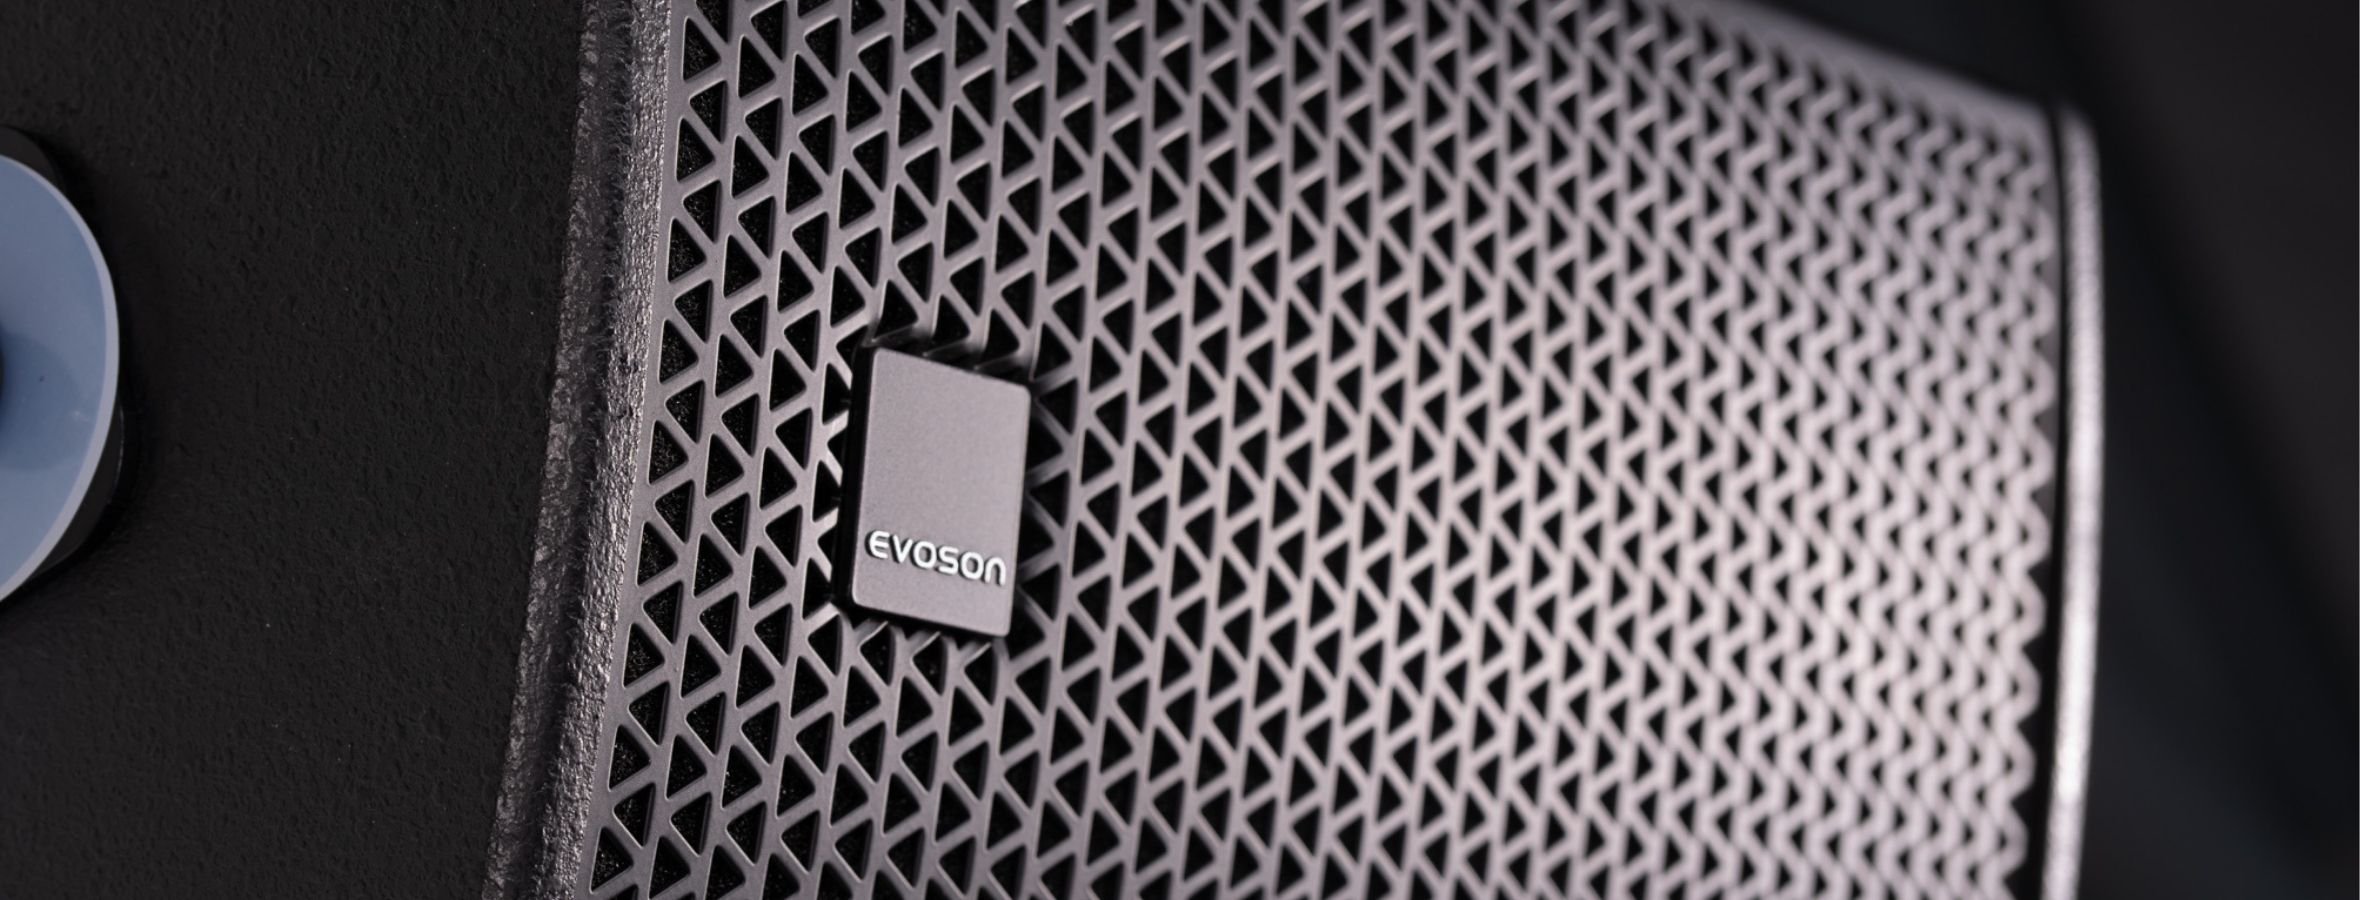 An Evoson virtual studio loudspeaker